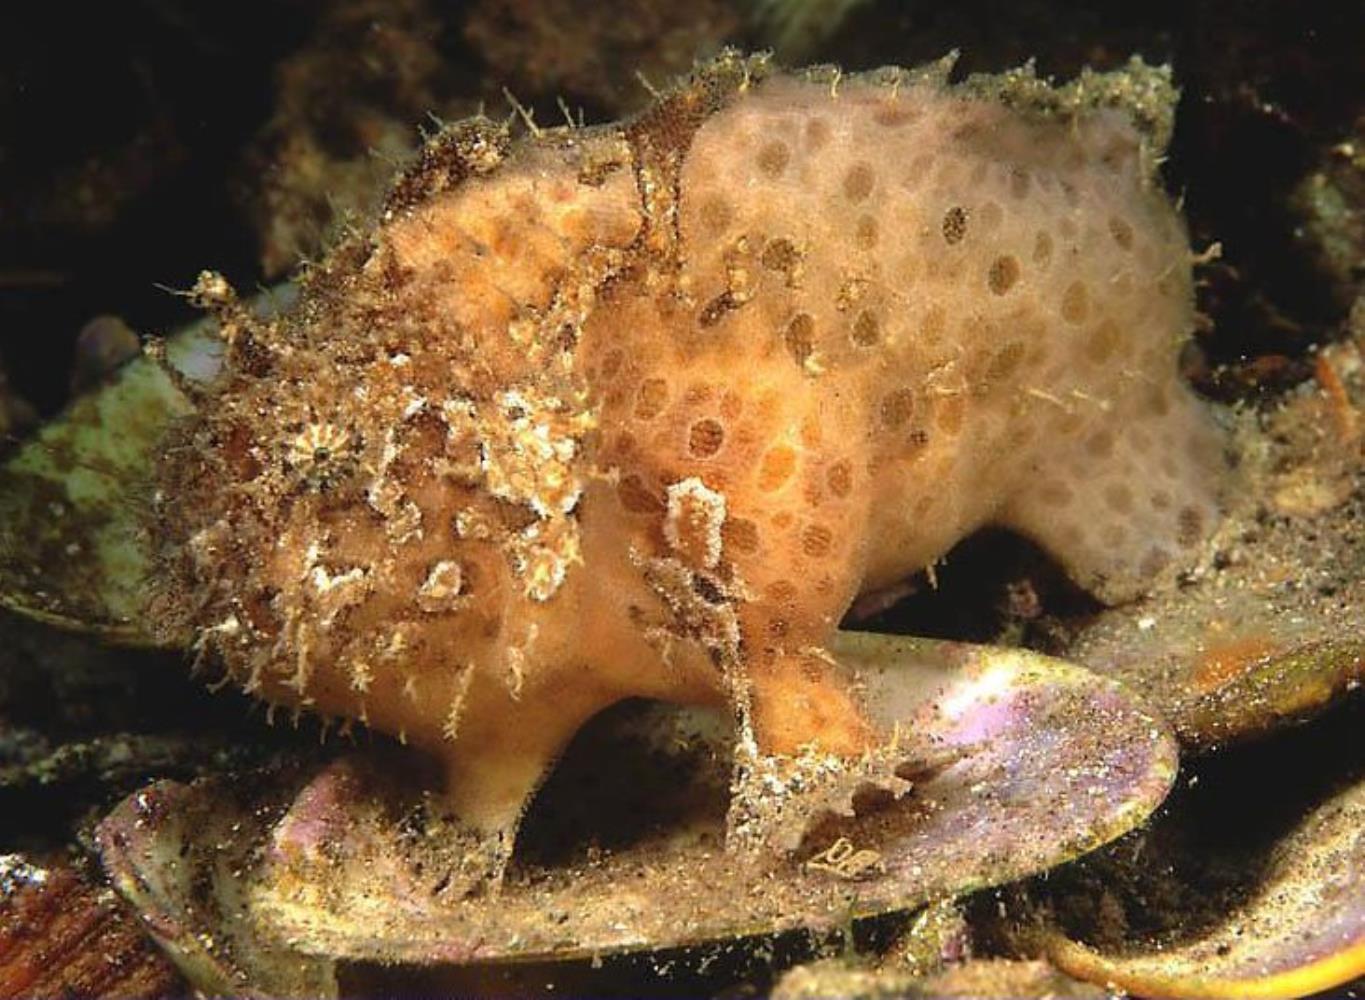 Sponge anglerfish